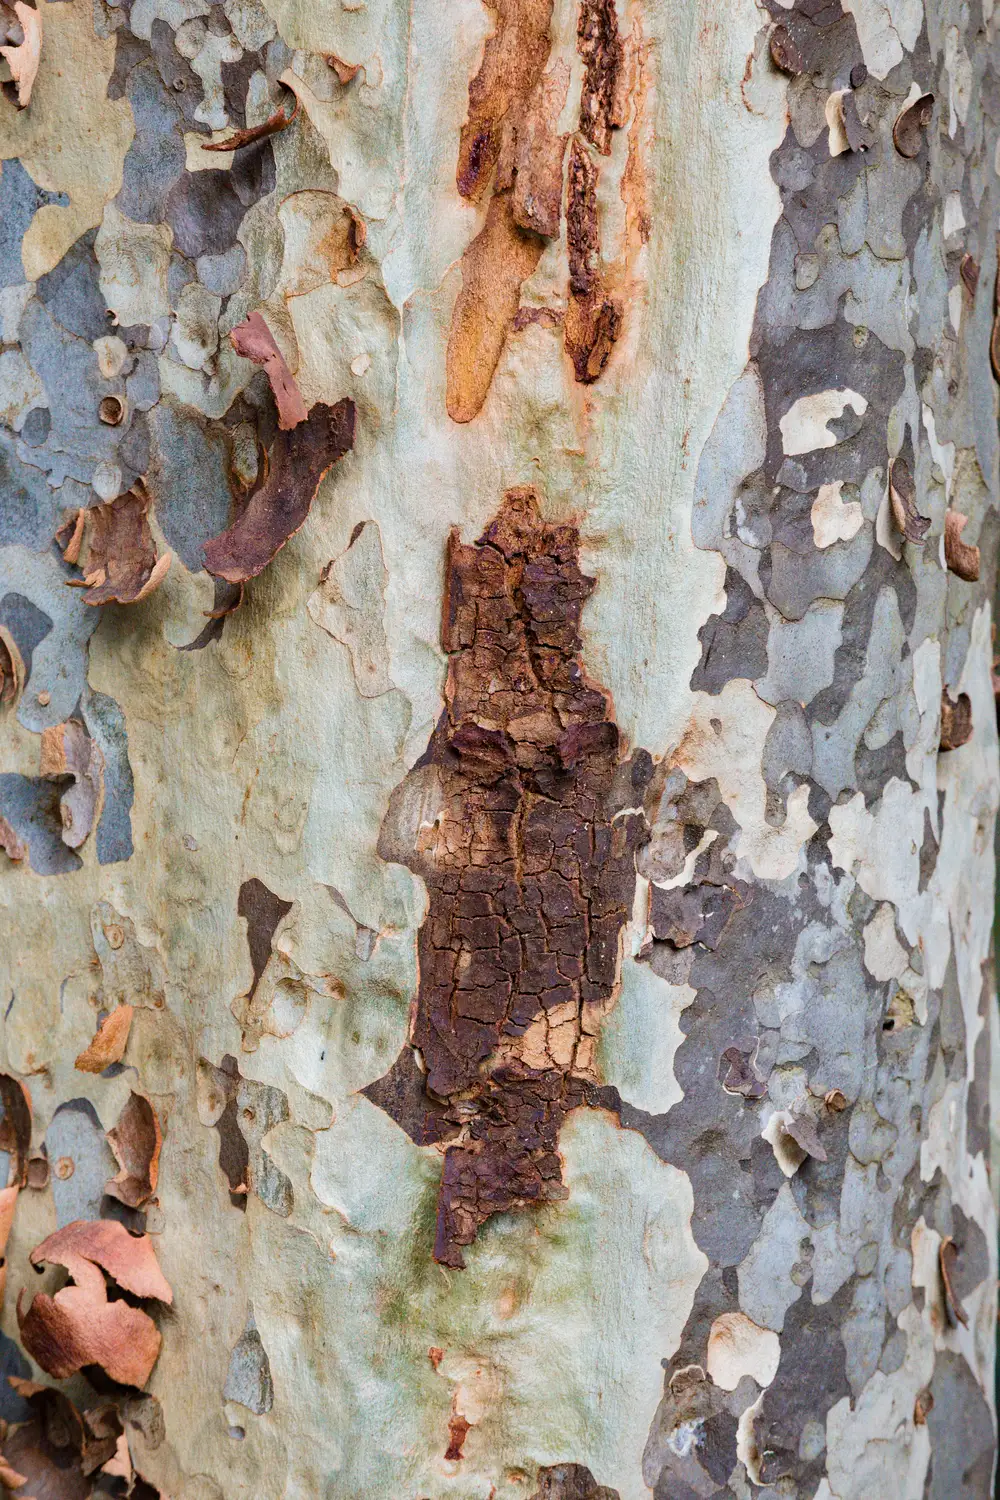 Patterned tree bark